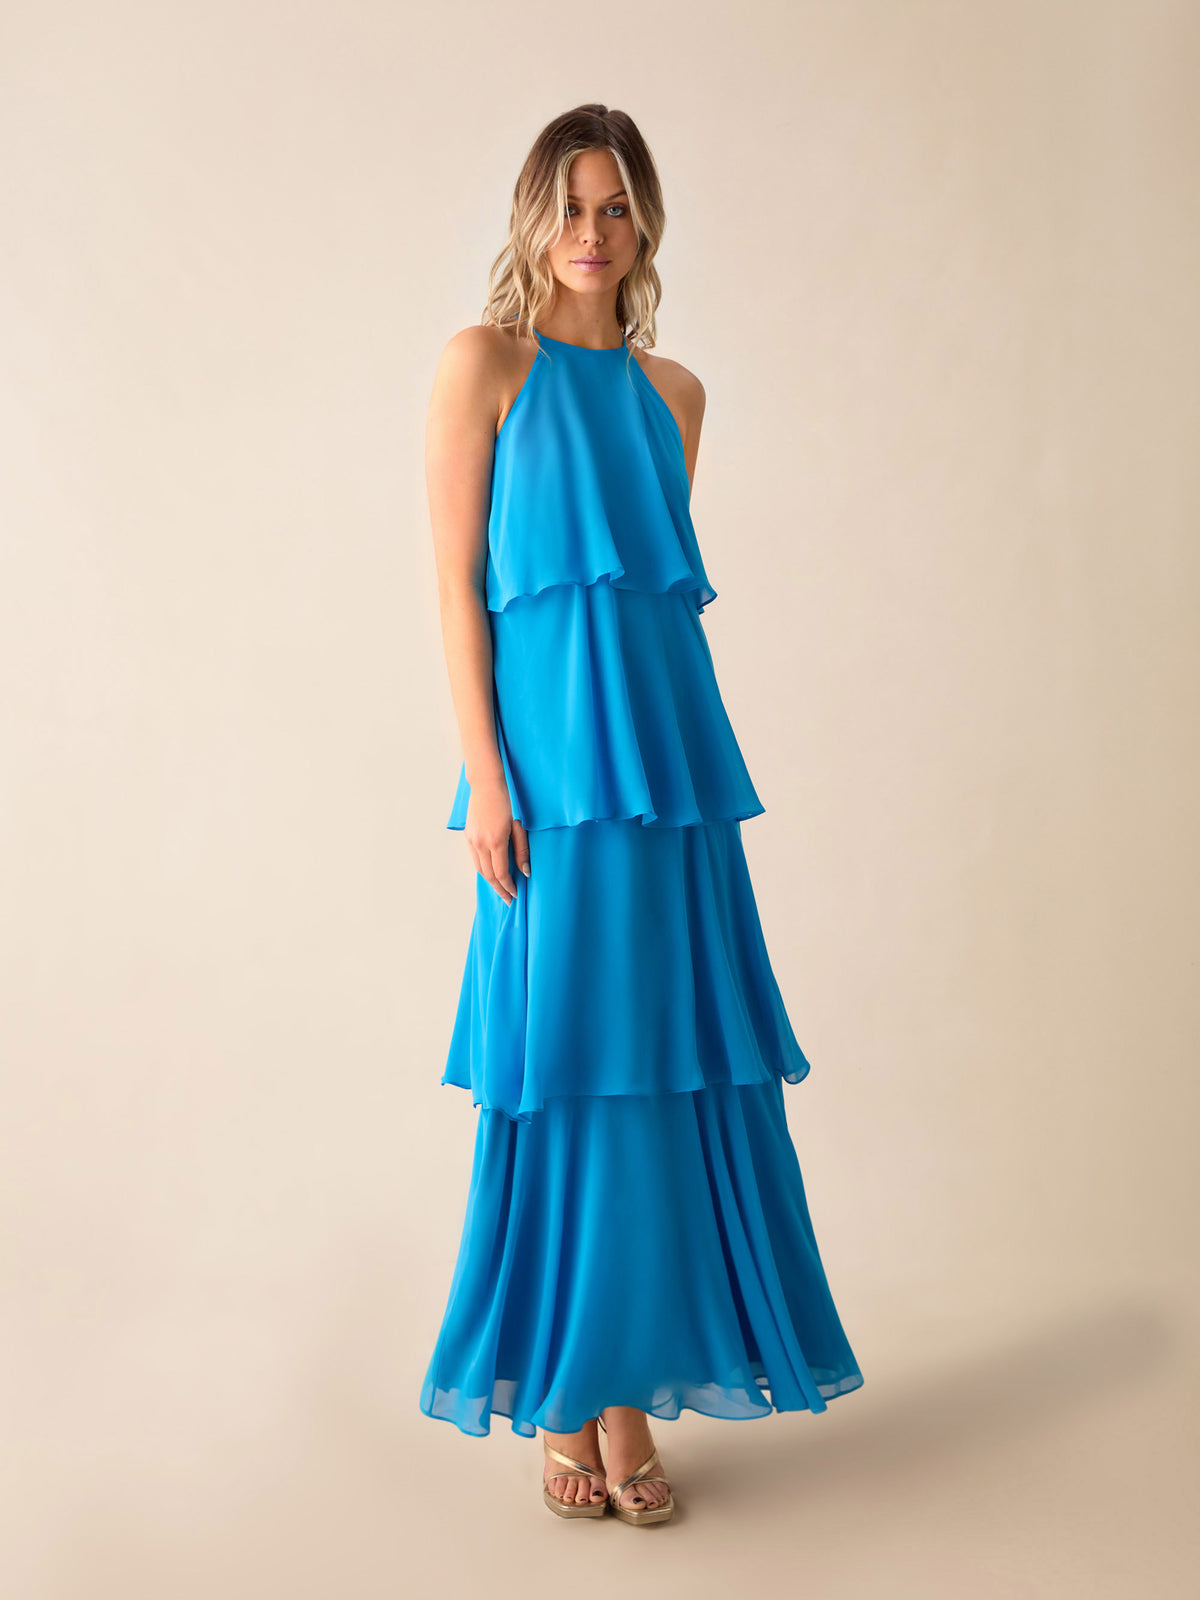 Savannah Blue Chiffon Tiered Maxi Dress